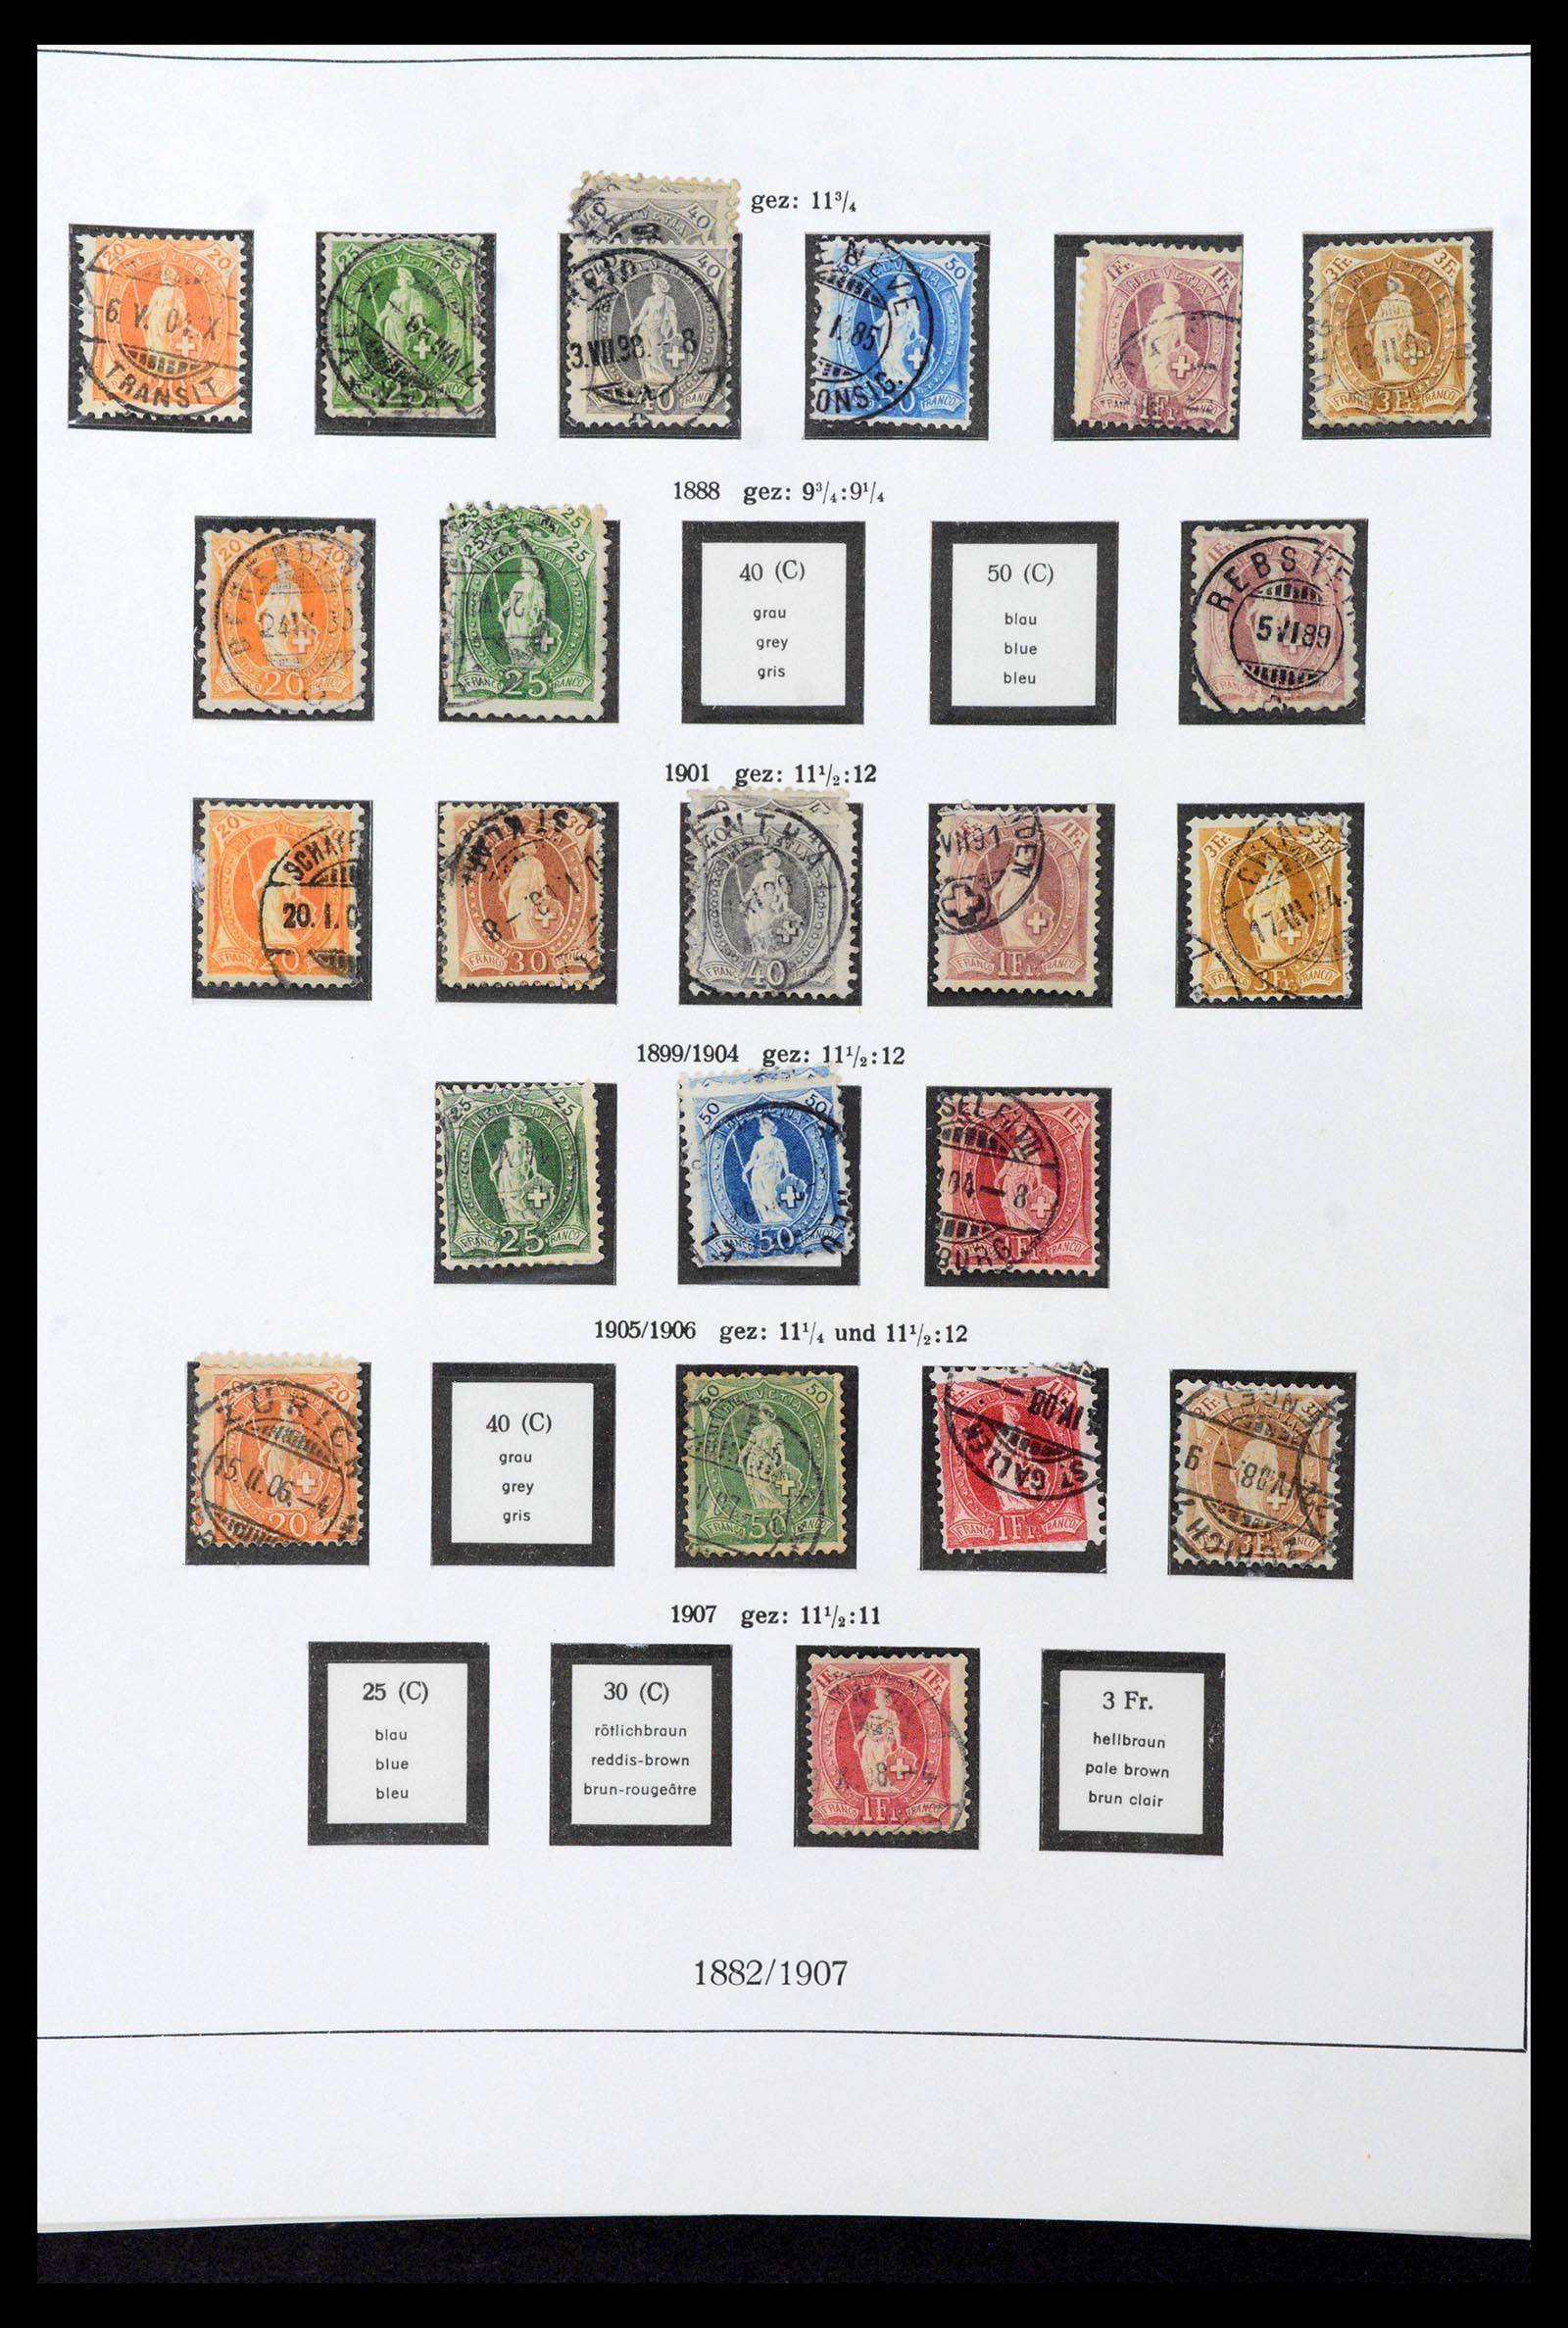 39235 0009 - Stamp collection 39235 Switzerland 1843-1960.